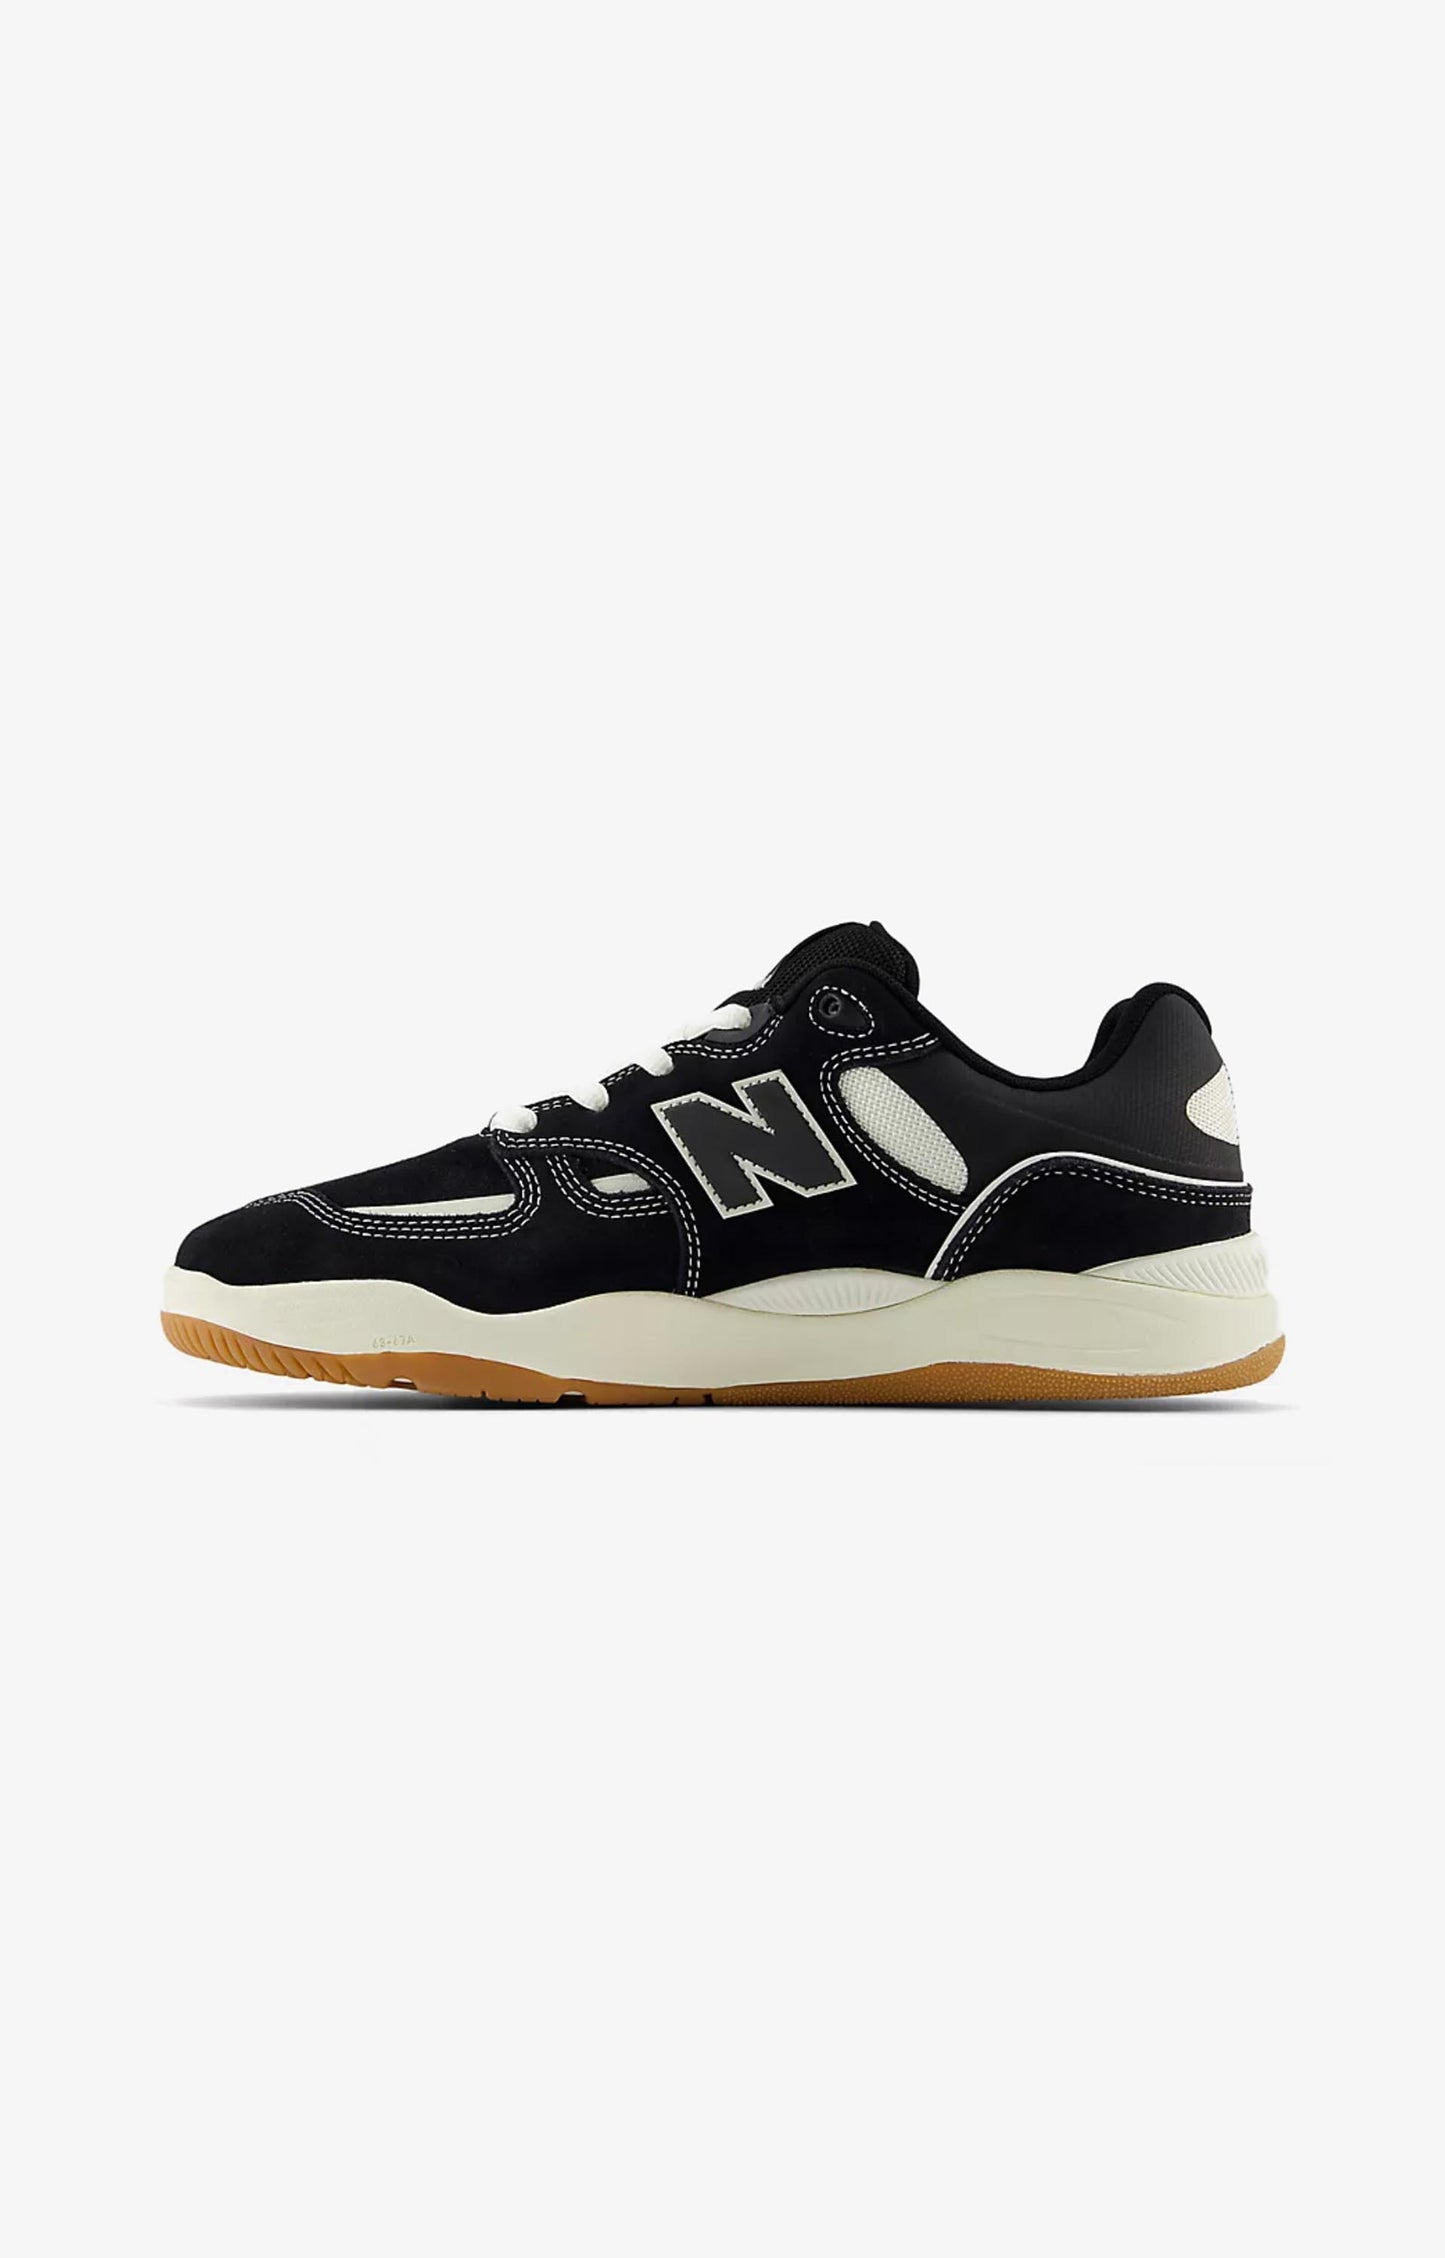 New Balance Numeric NM1010SB Shoe, Black/Sea Salt